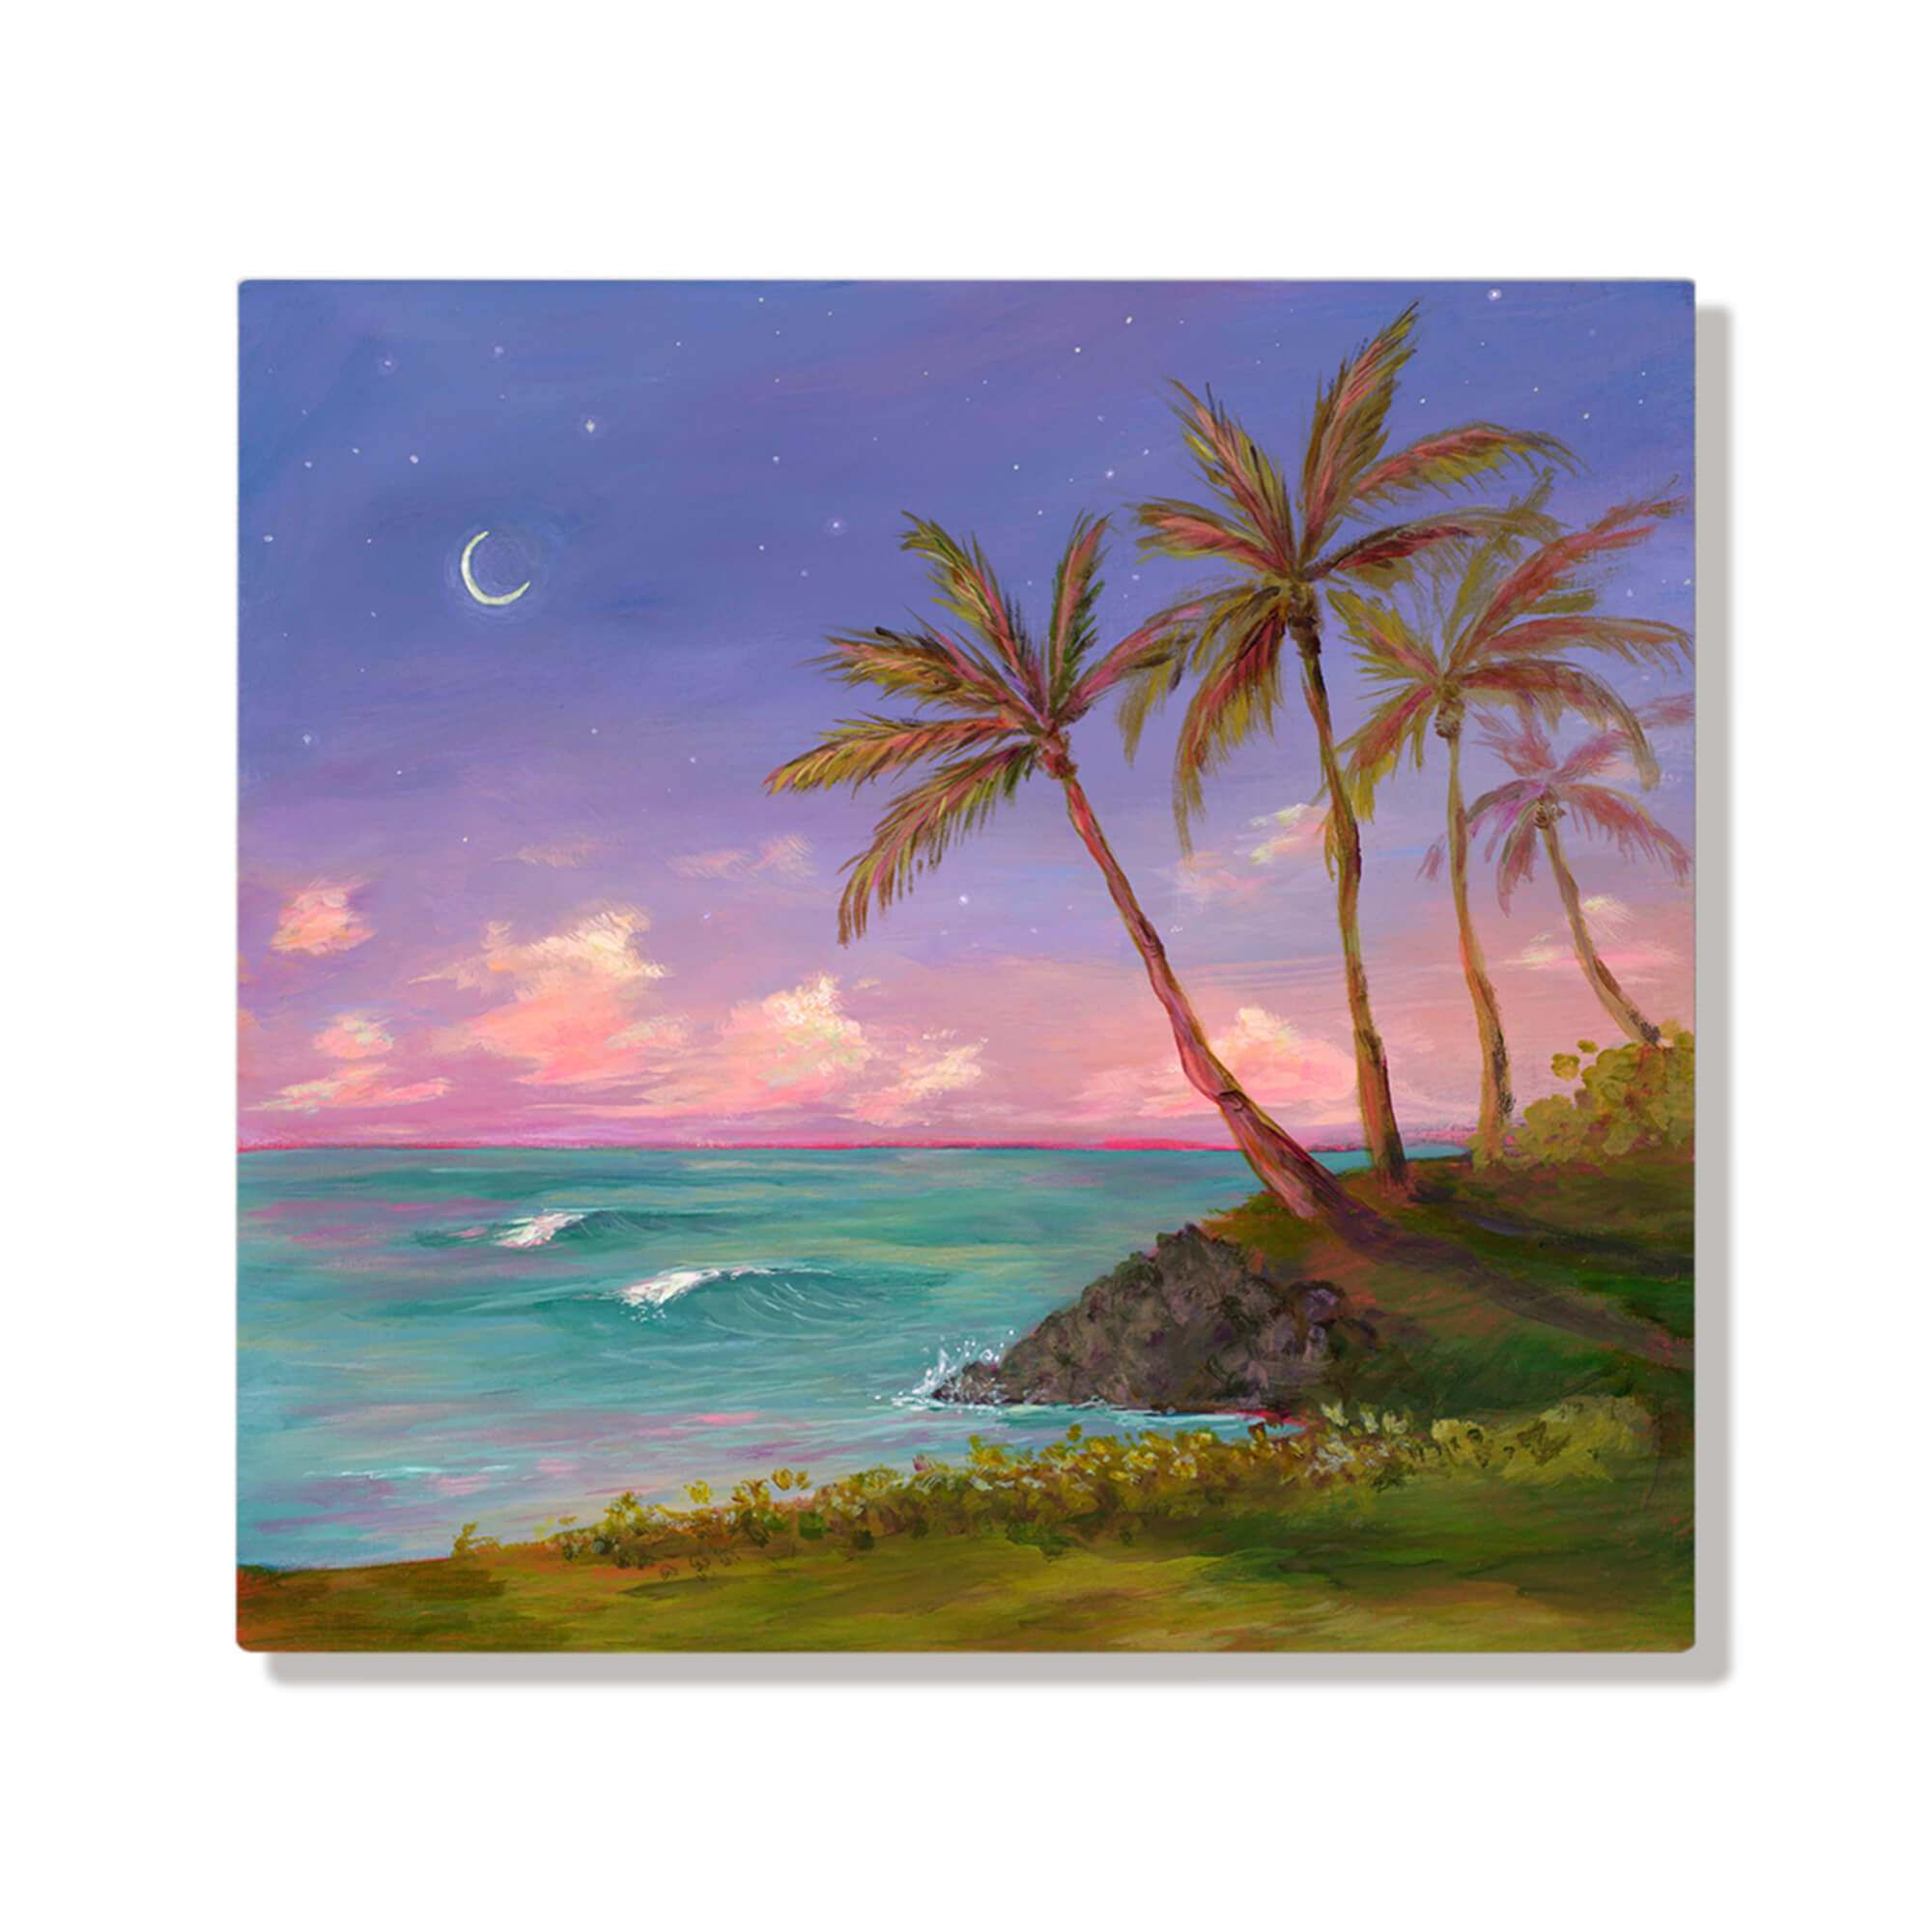 A stunning dream-like sunset seascape by Hawaii artist Lindsay Wilkins